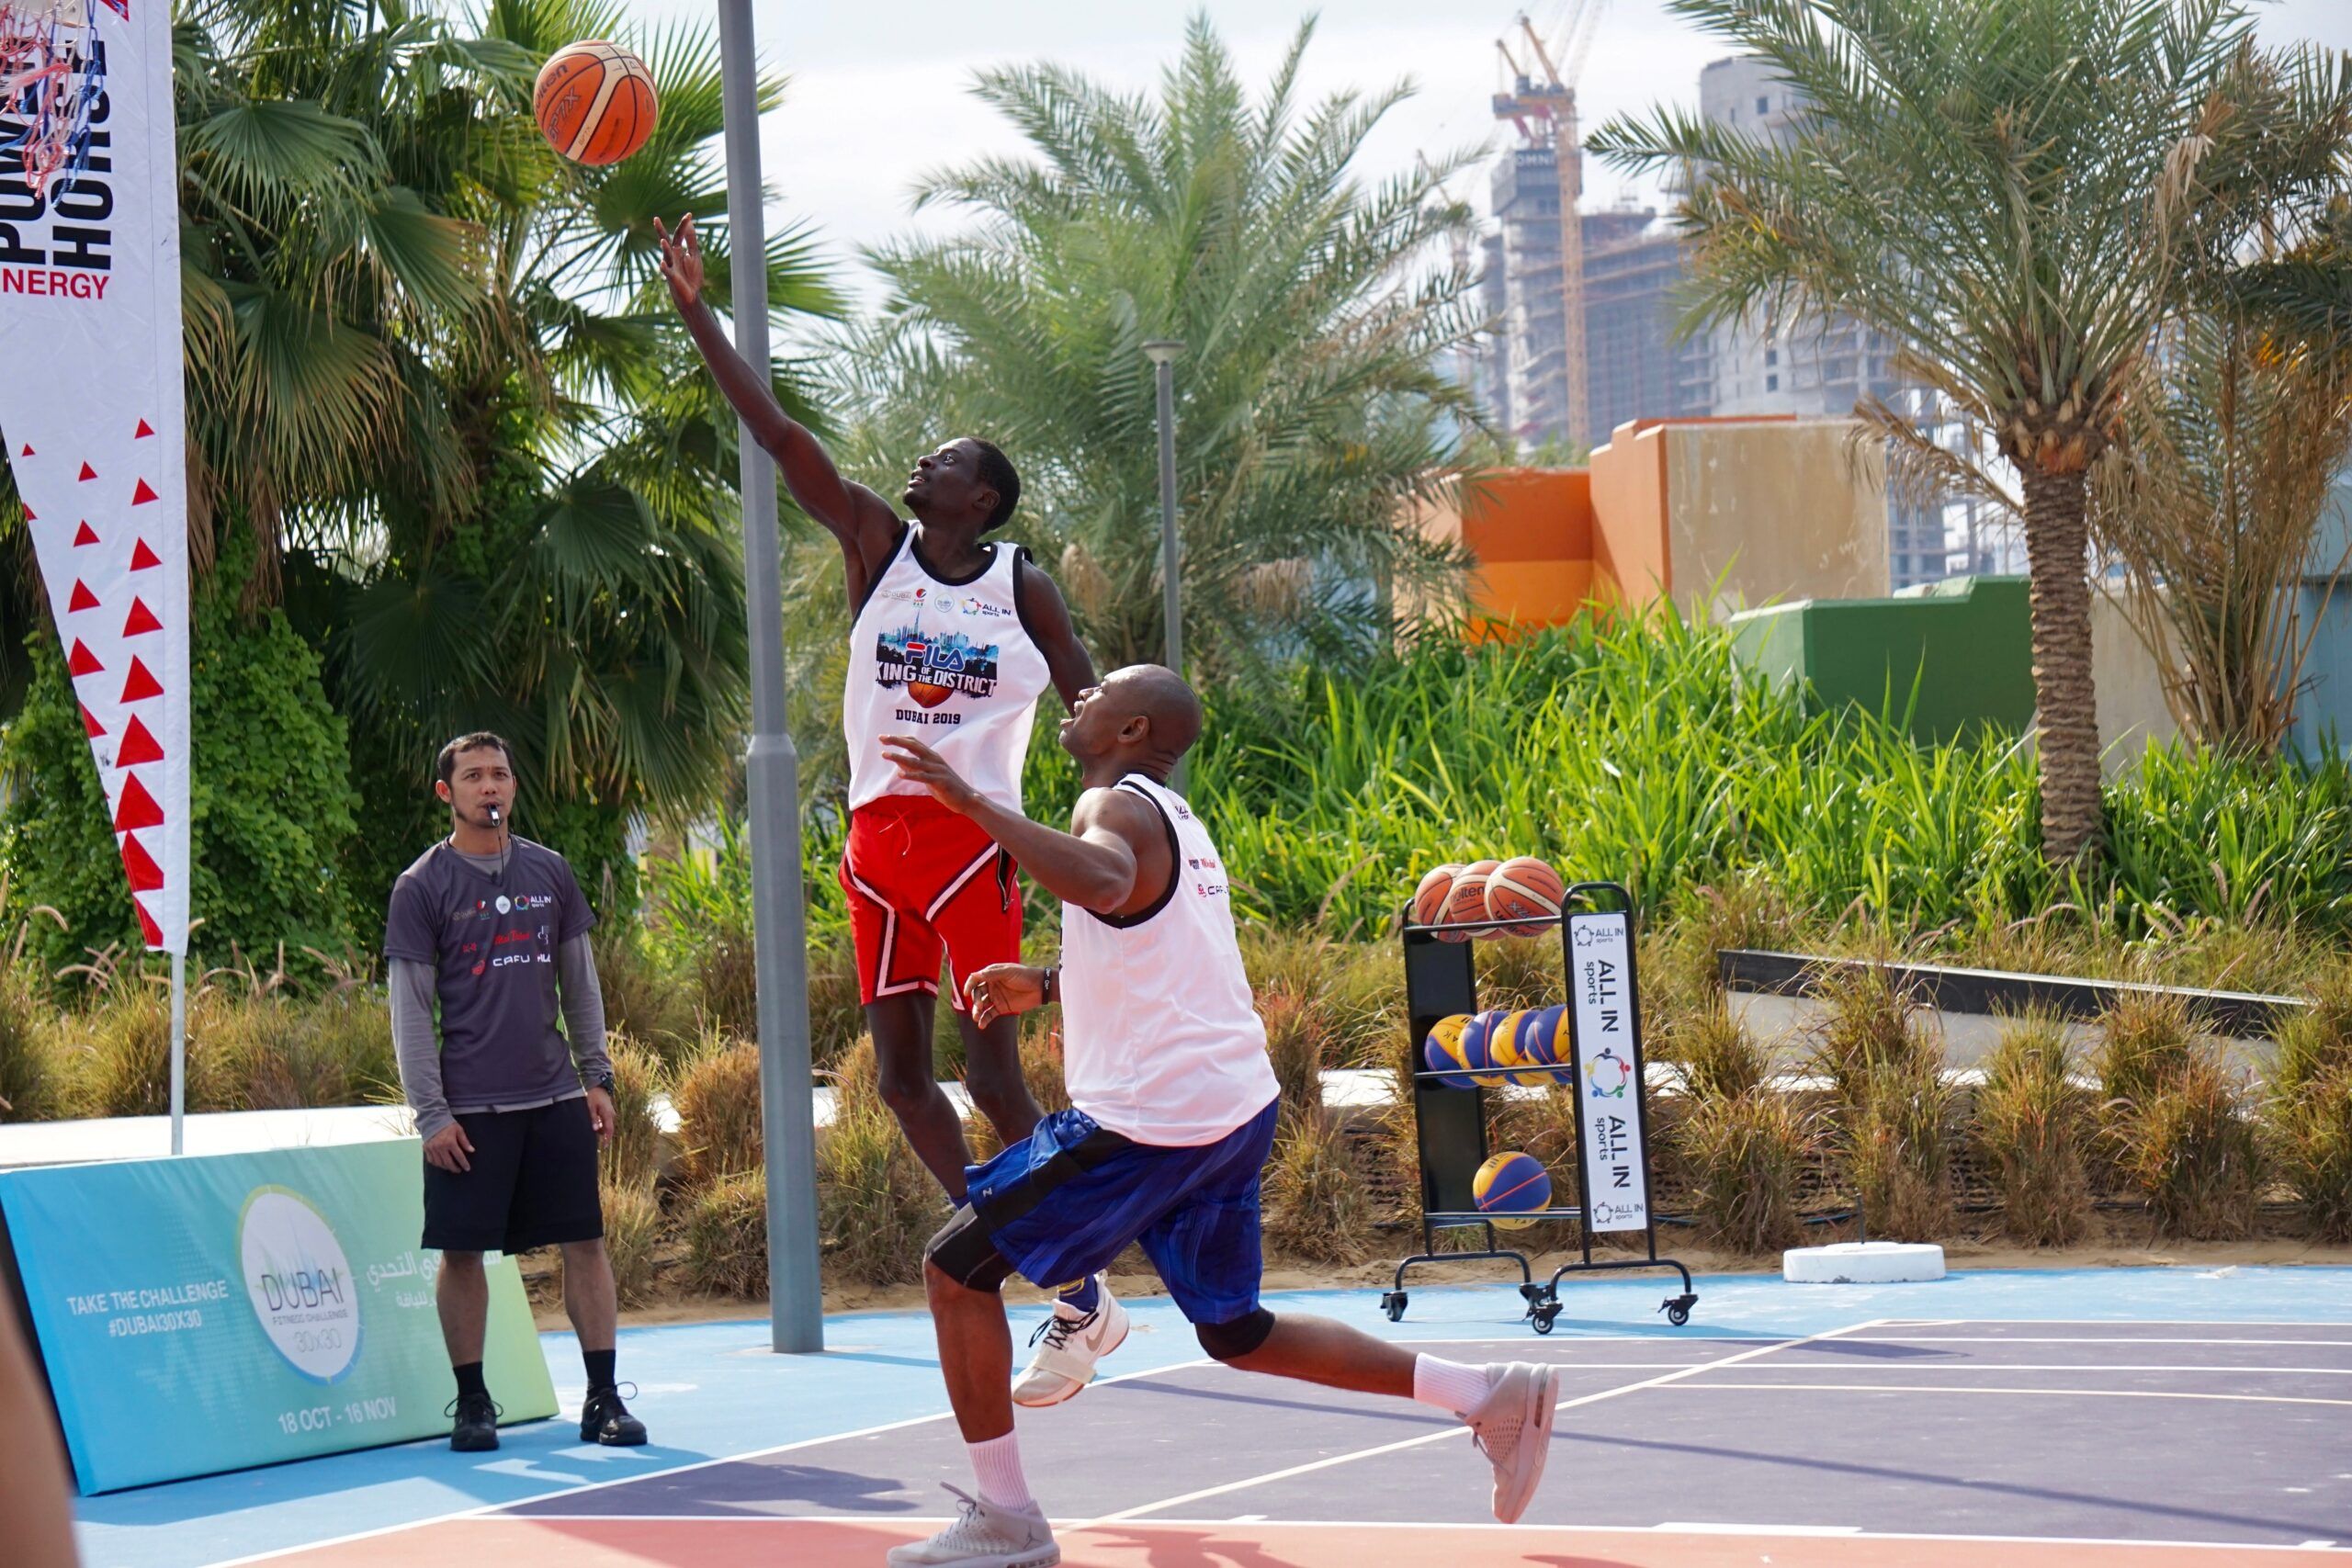 Vuelve el torneo de baloncesto Dubai King of the District scaled